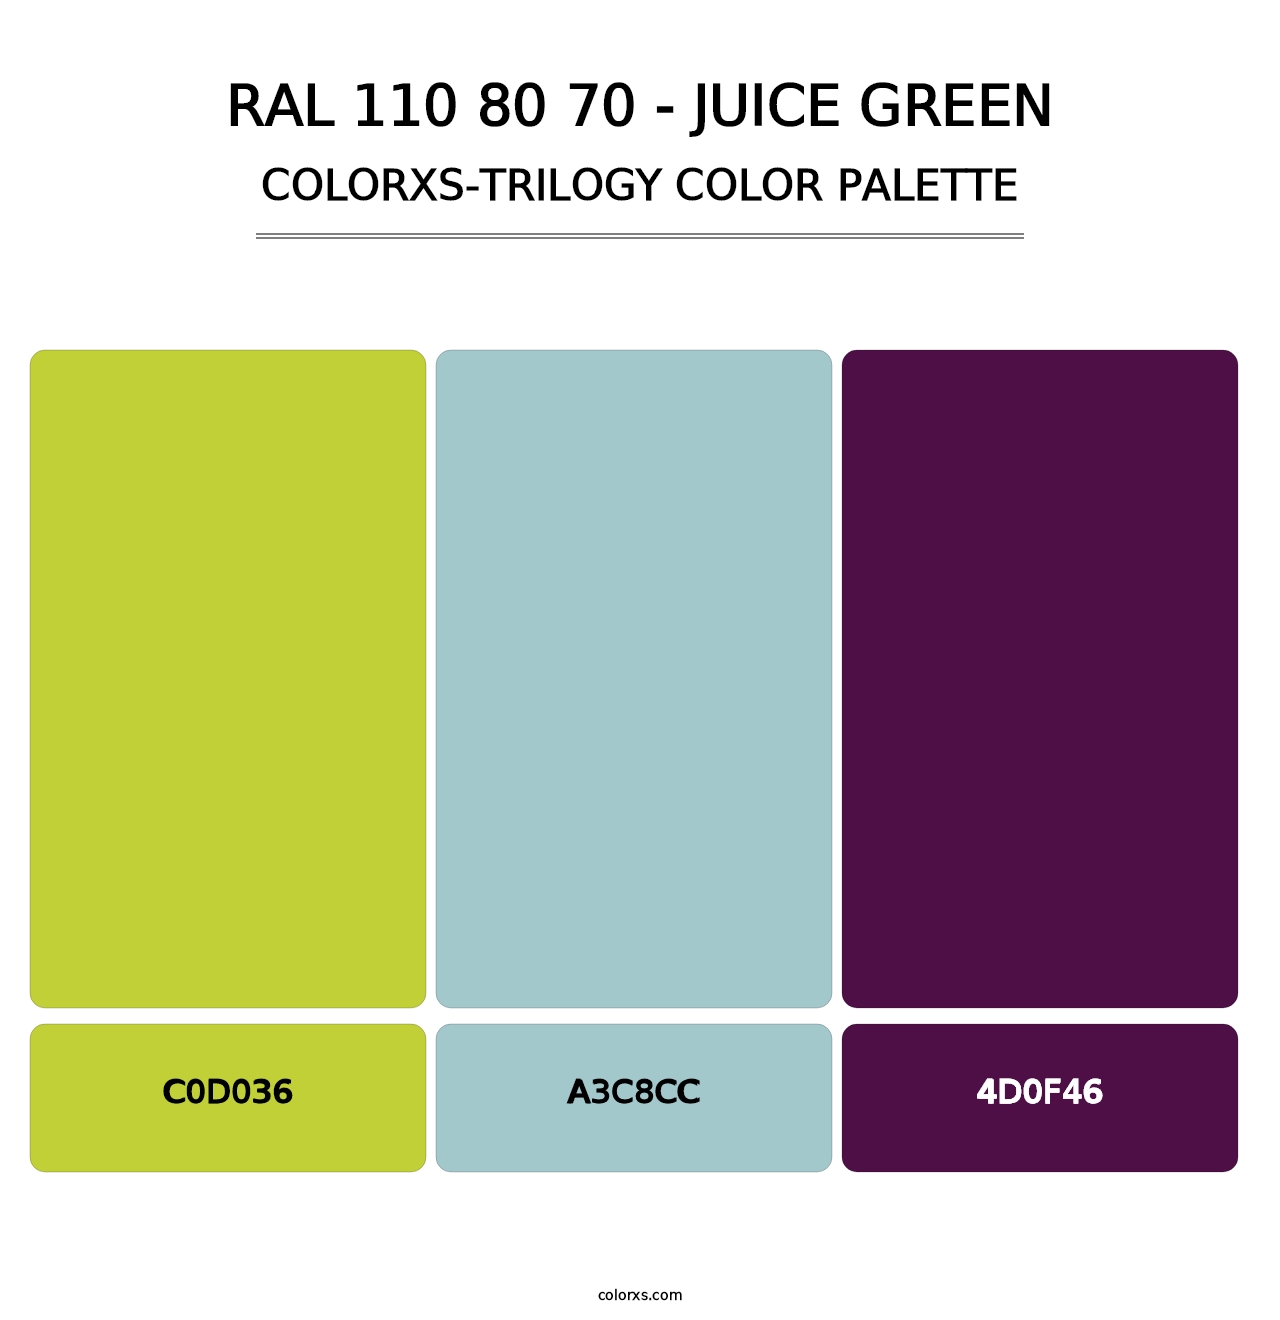 RAL 110 80 70 - Juice Green - Colorxs Trilogy Palette